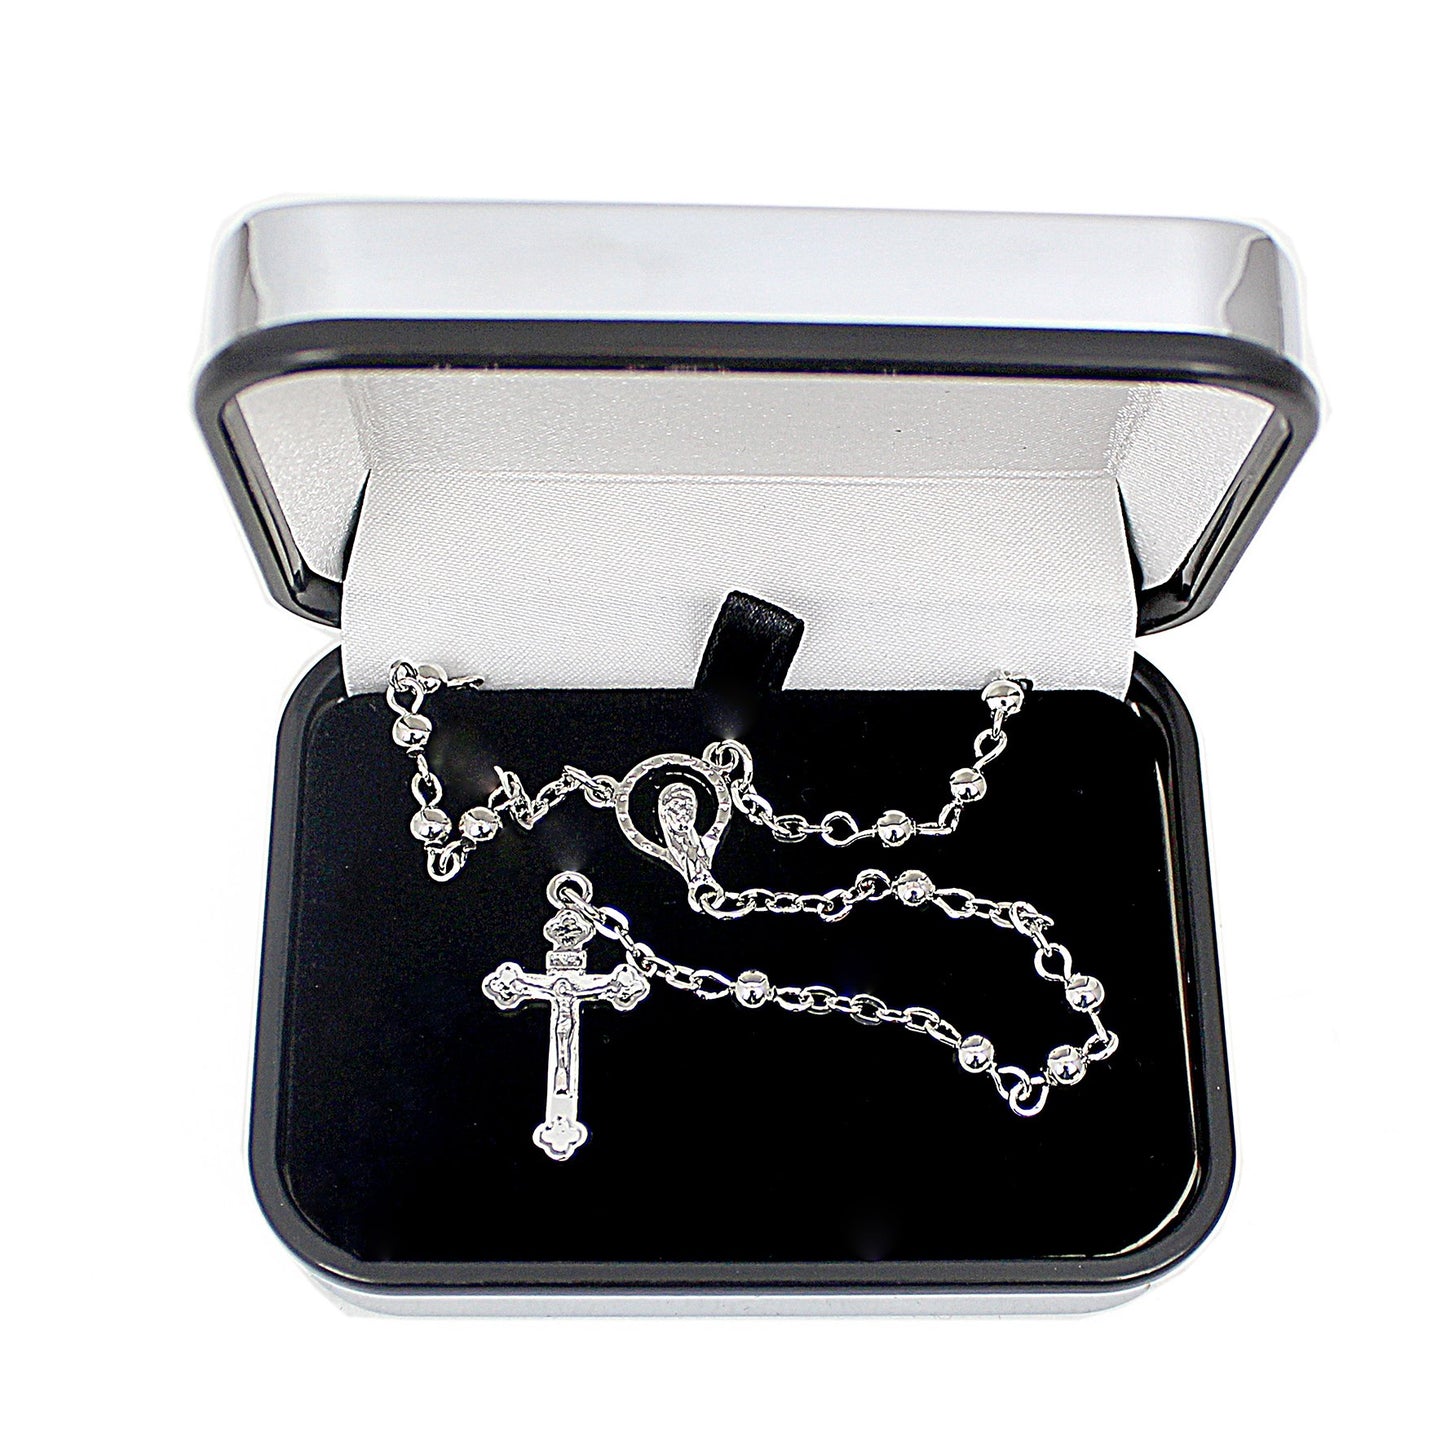 Personalised Cross Trinket Box & Rosary